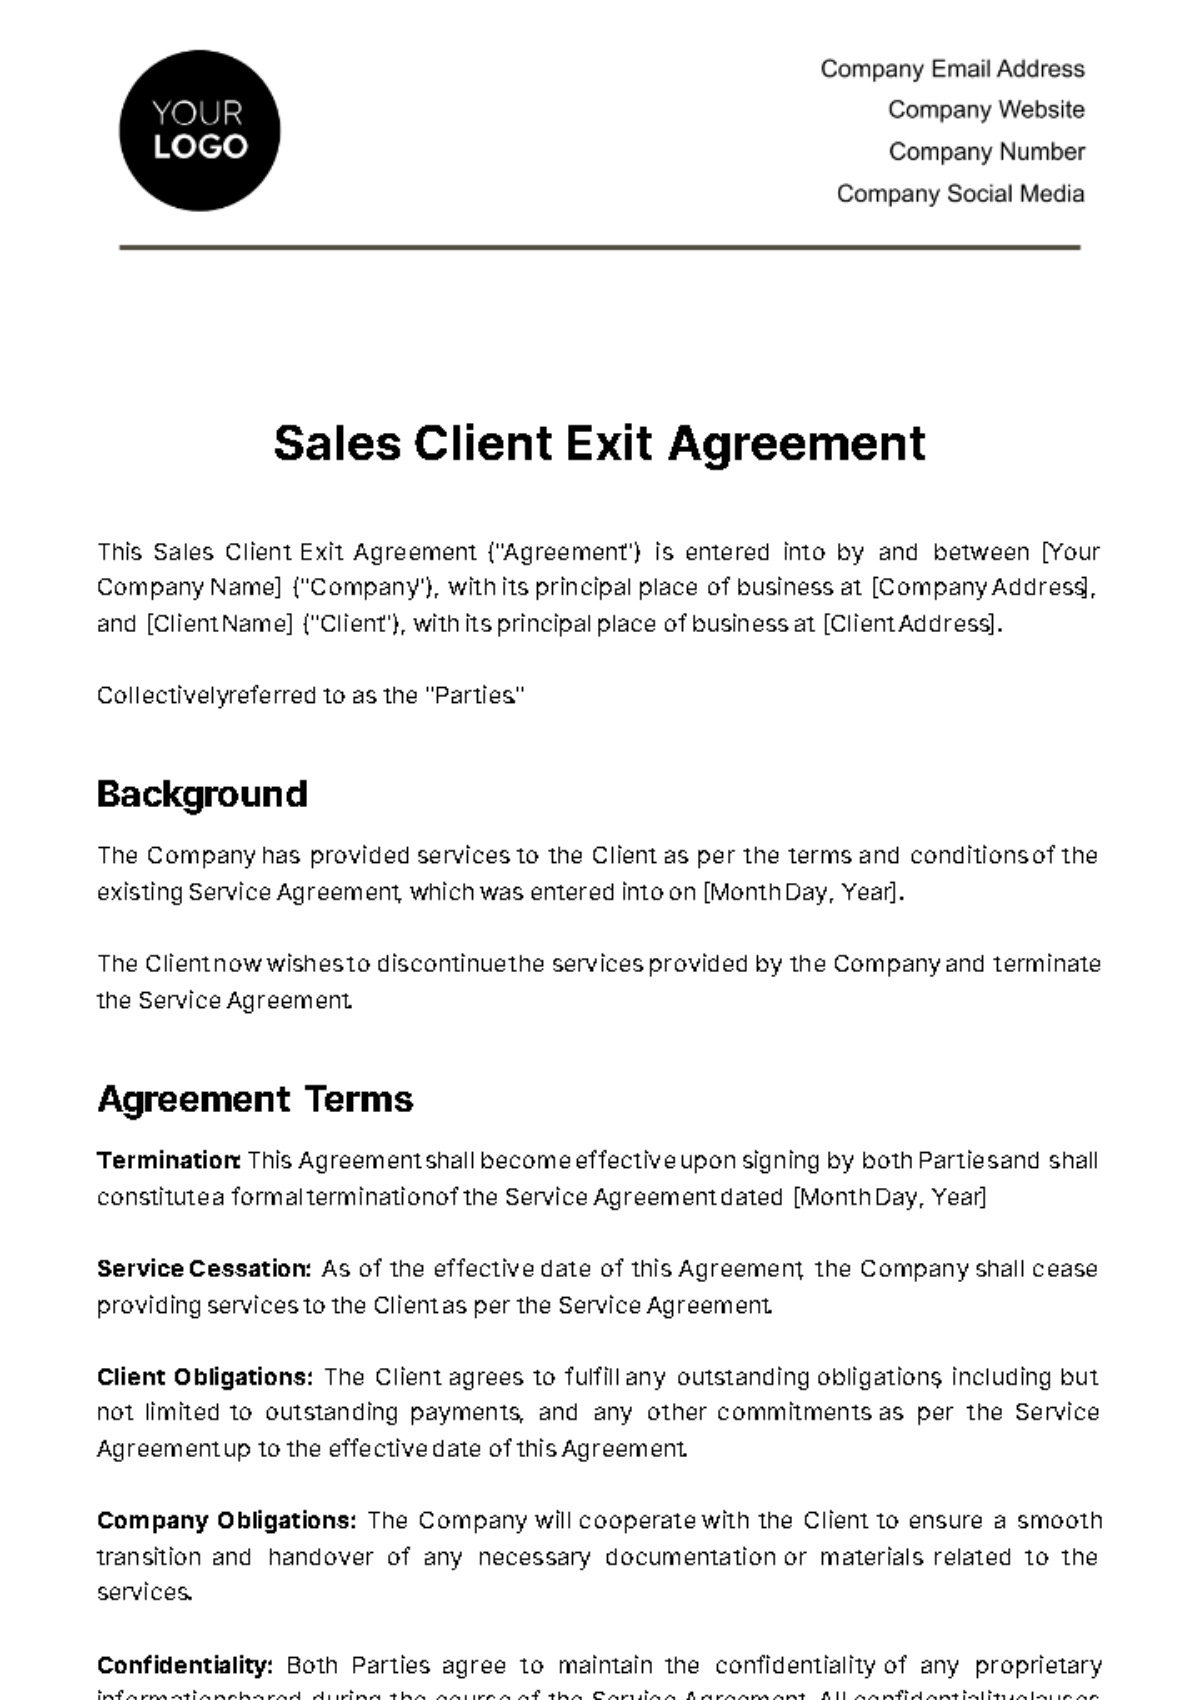 Sales Client Exit Agreement Template